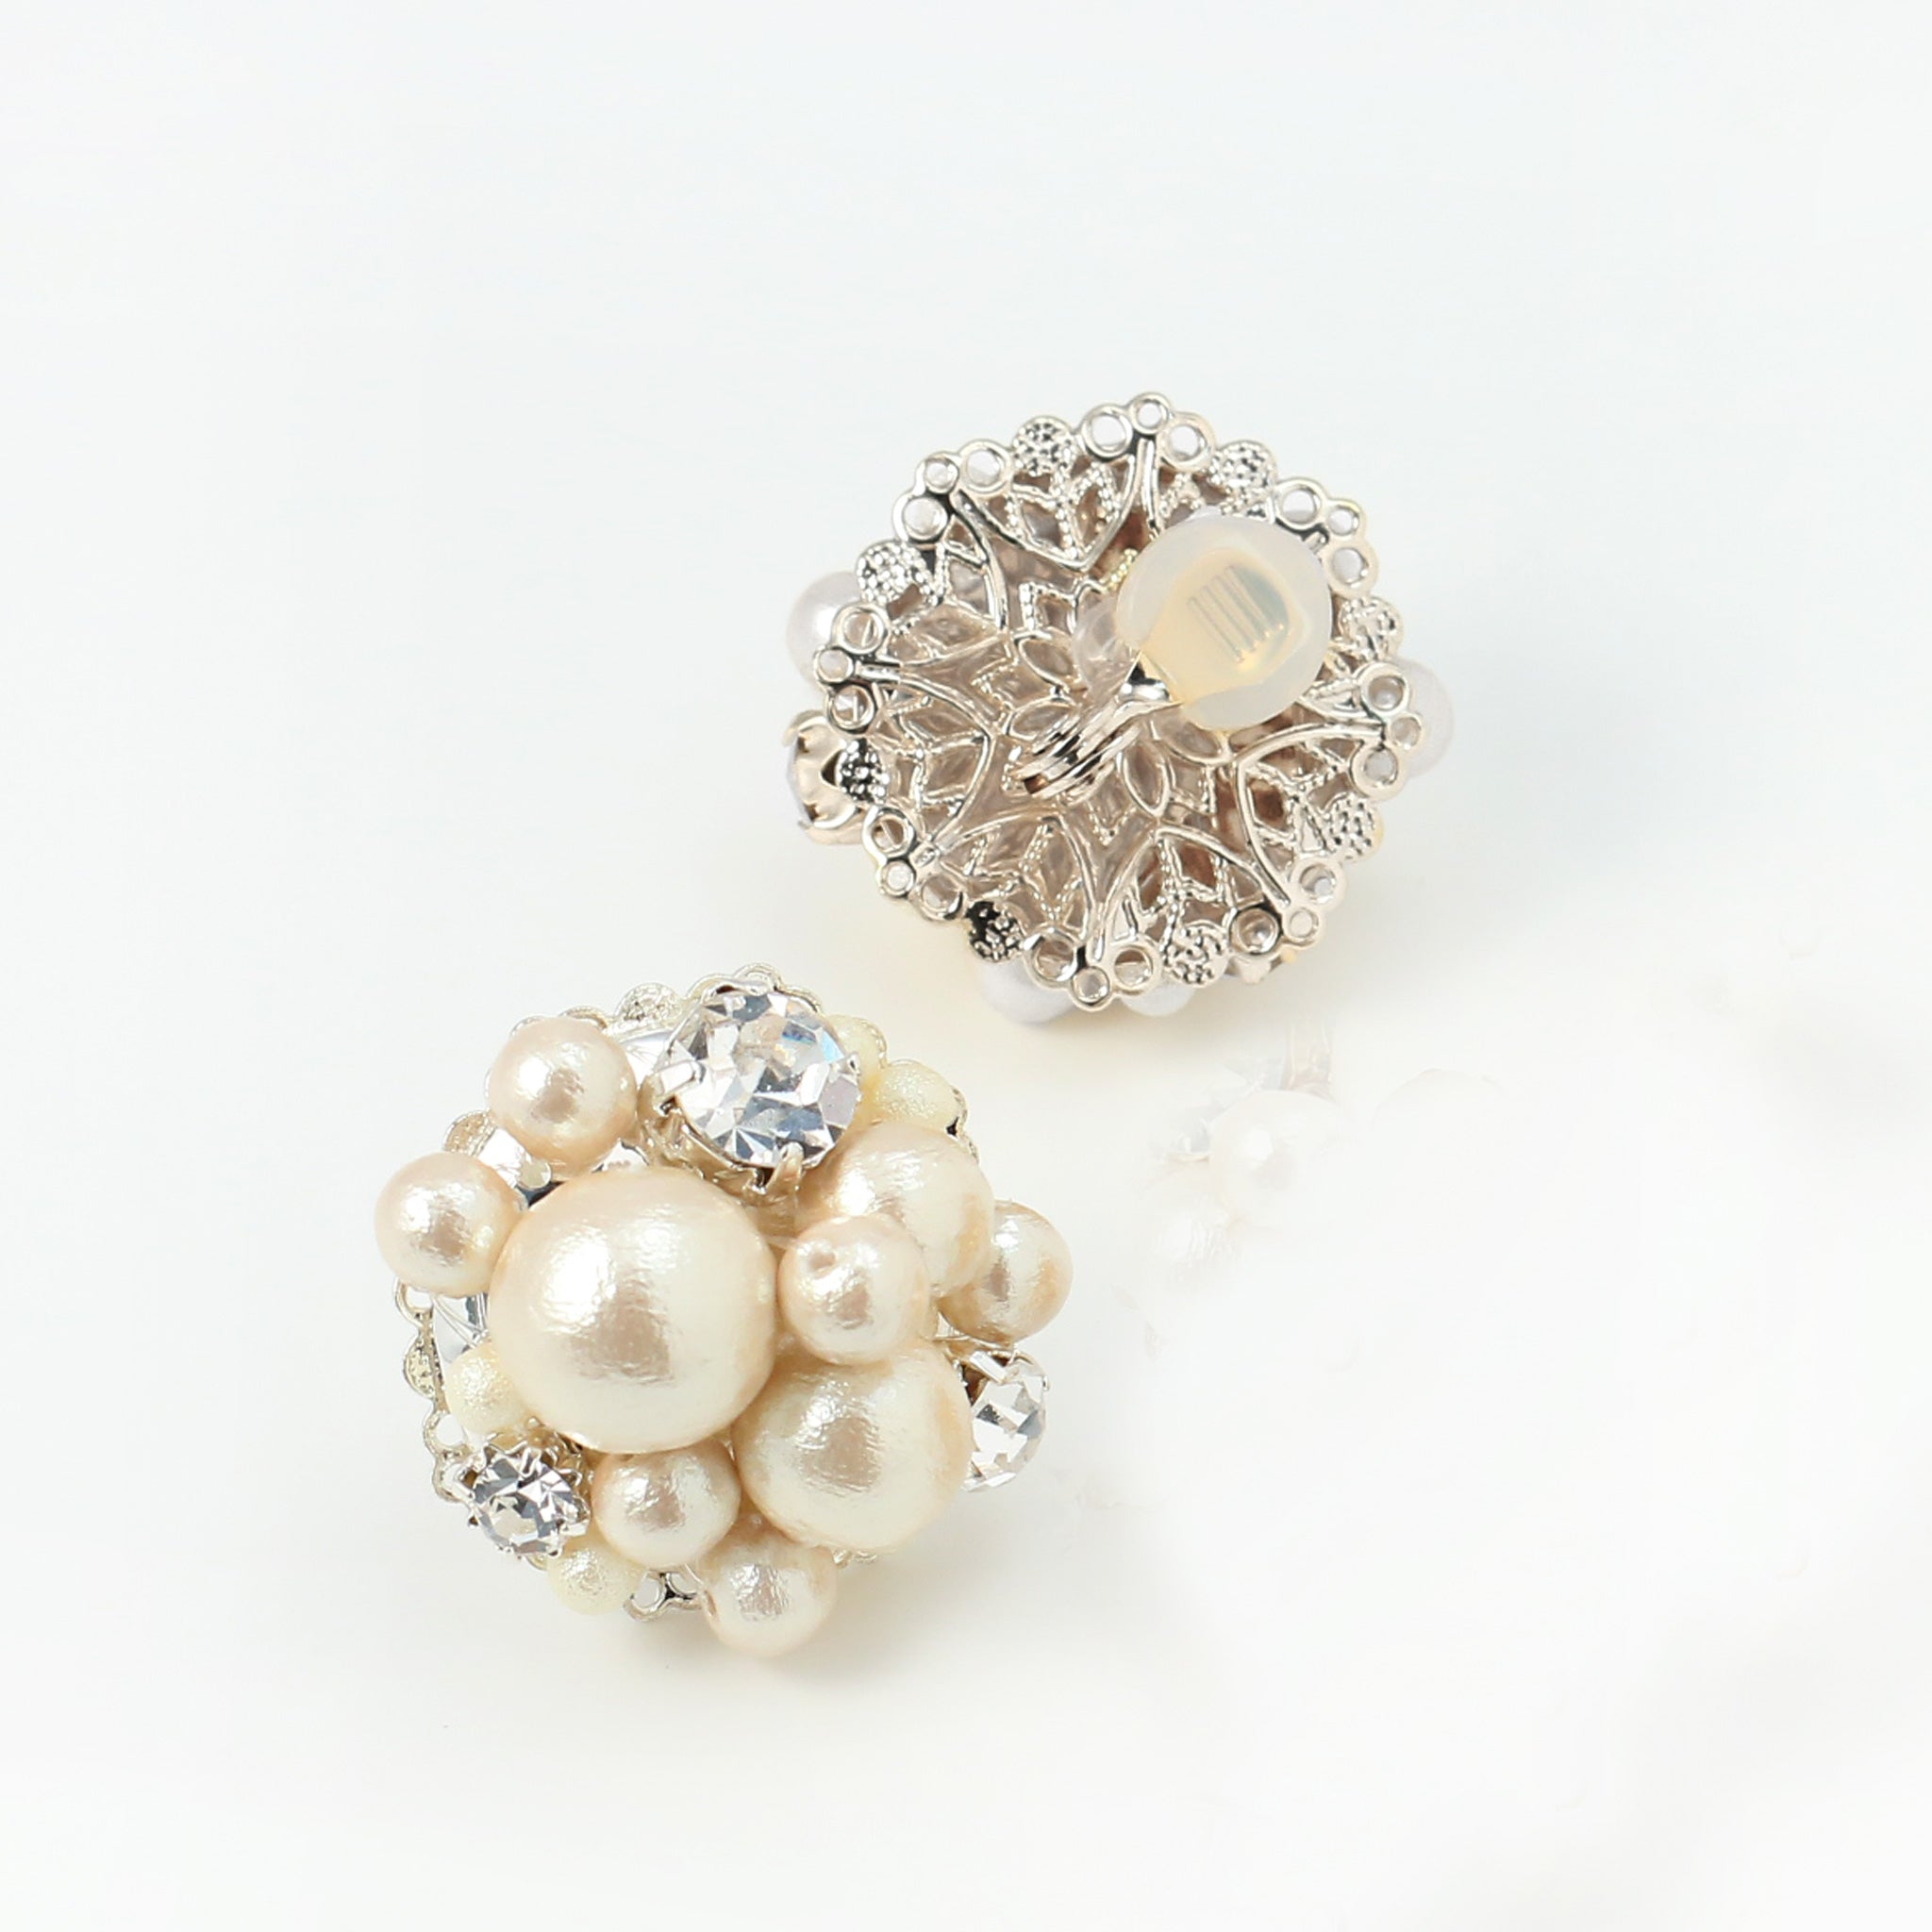 Cotton pearl and bijoux volume earrings / earrings